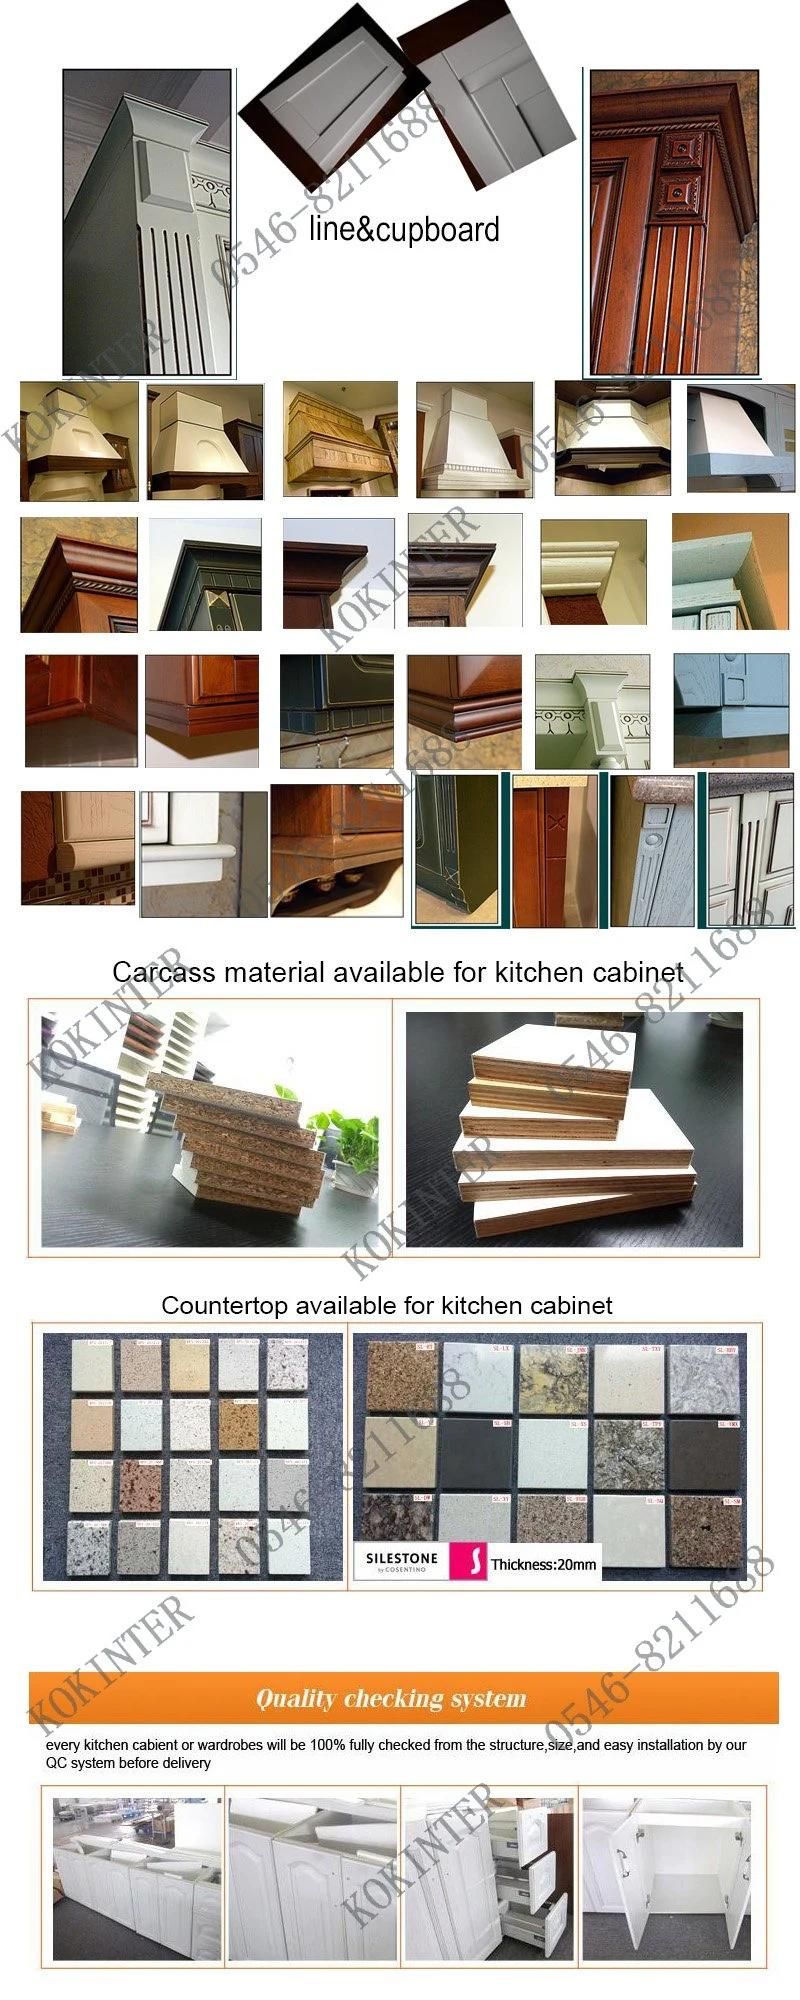 New Design China Soild Wood Kitchen Cabinet Six Modern